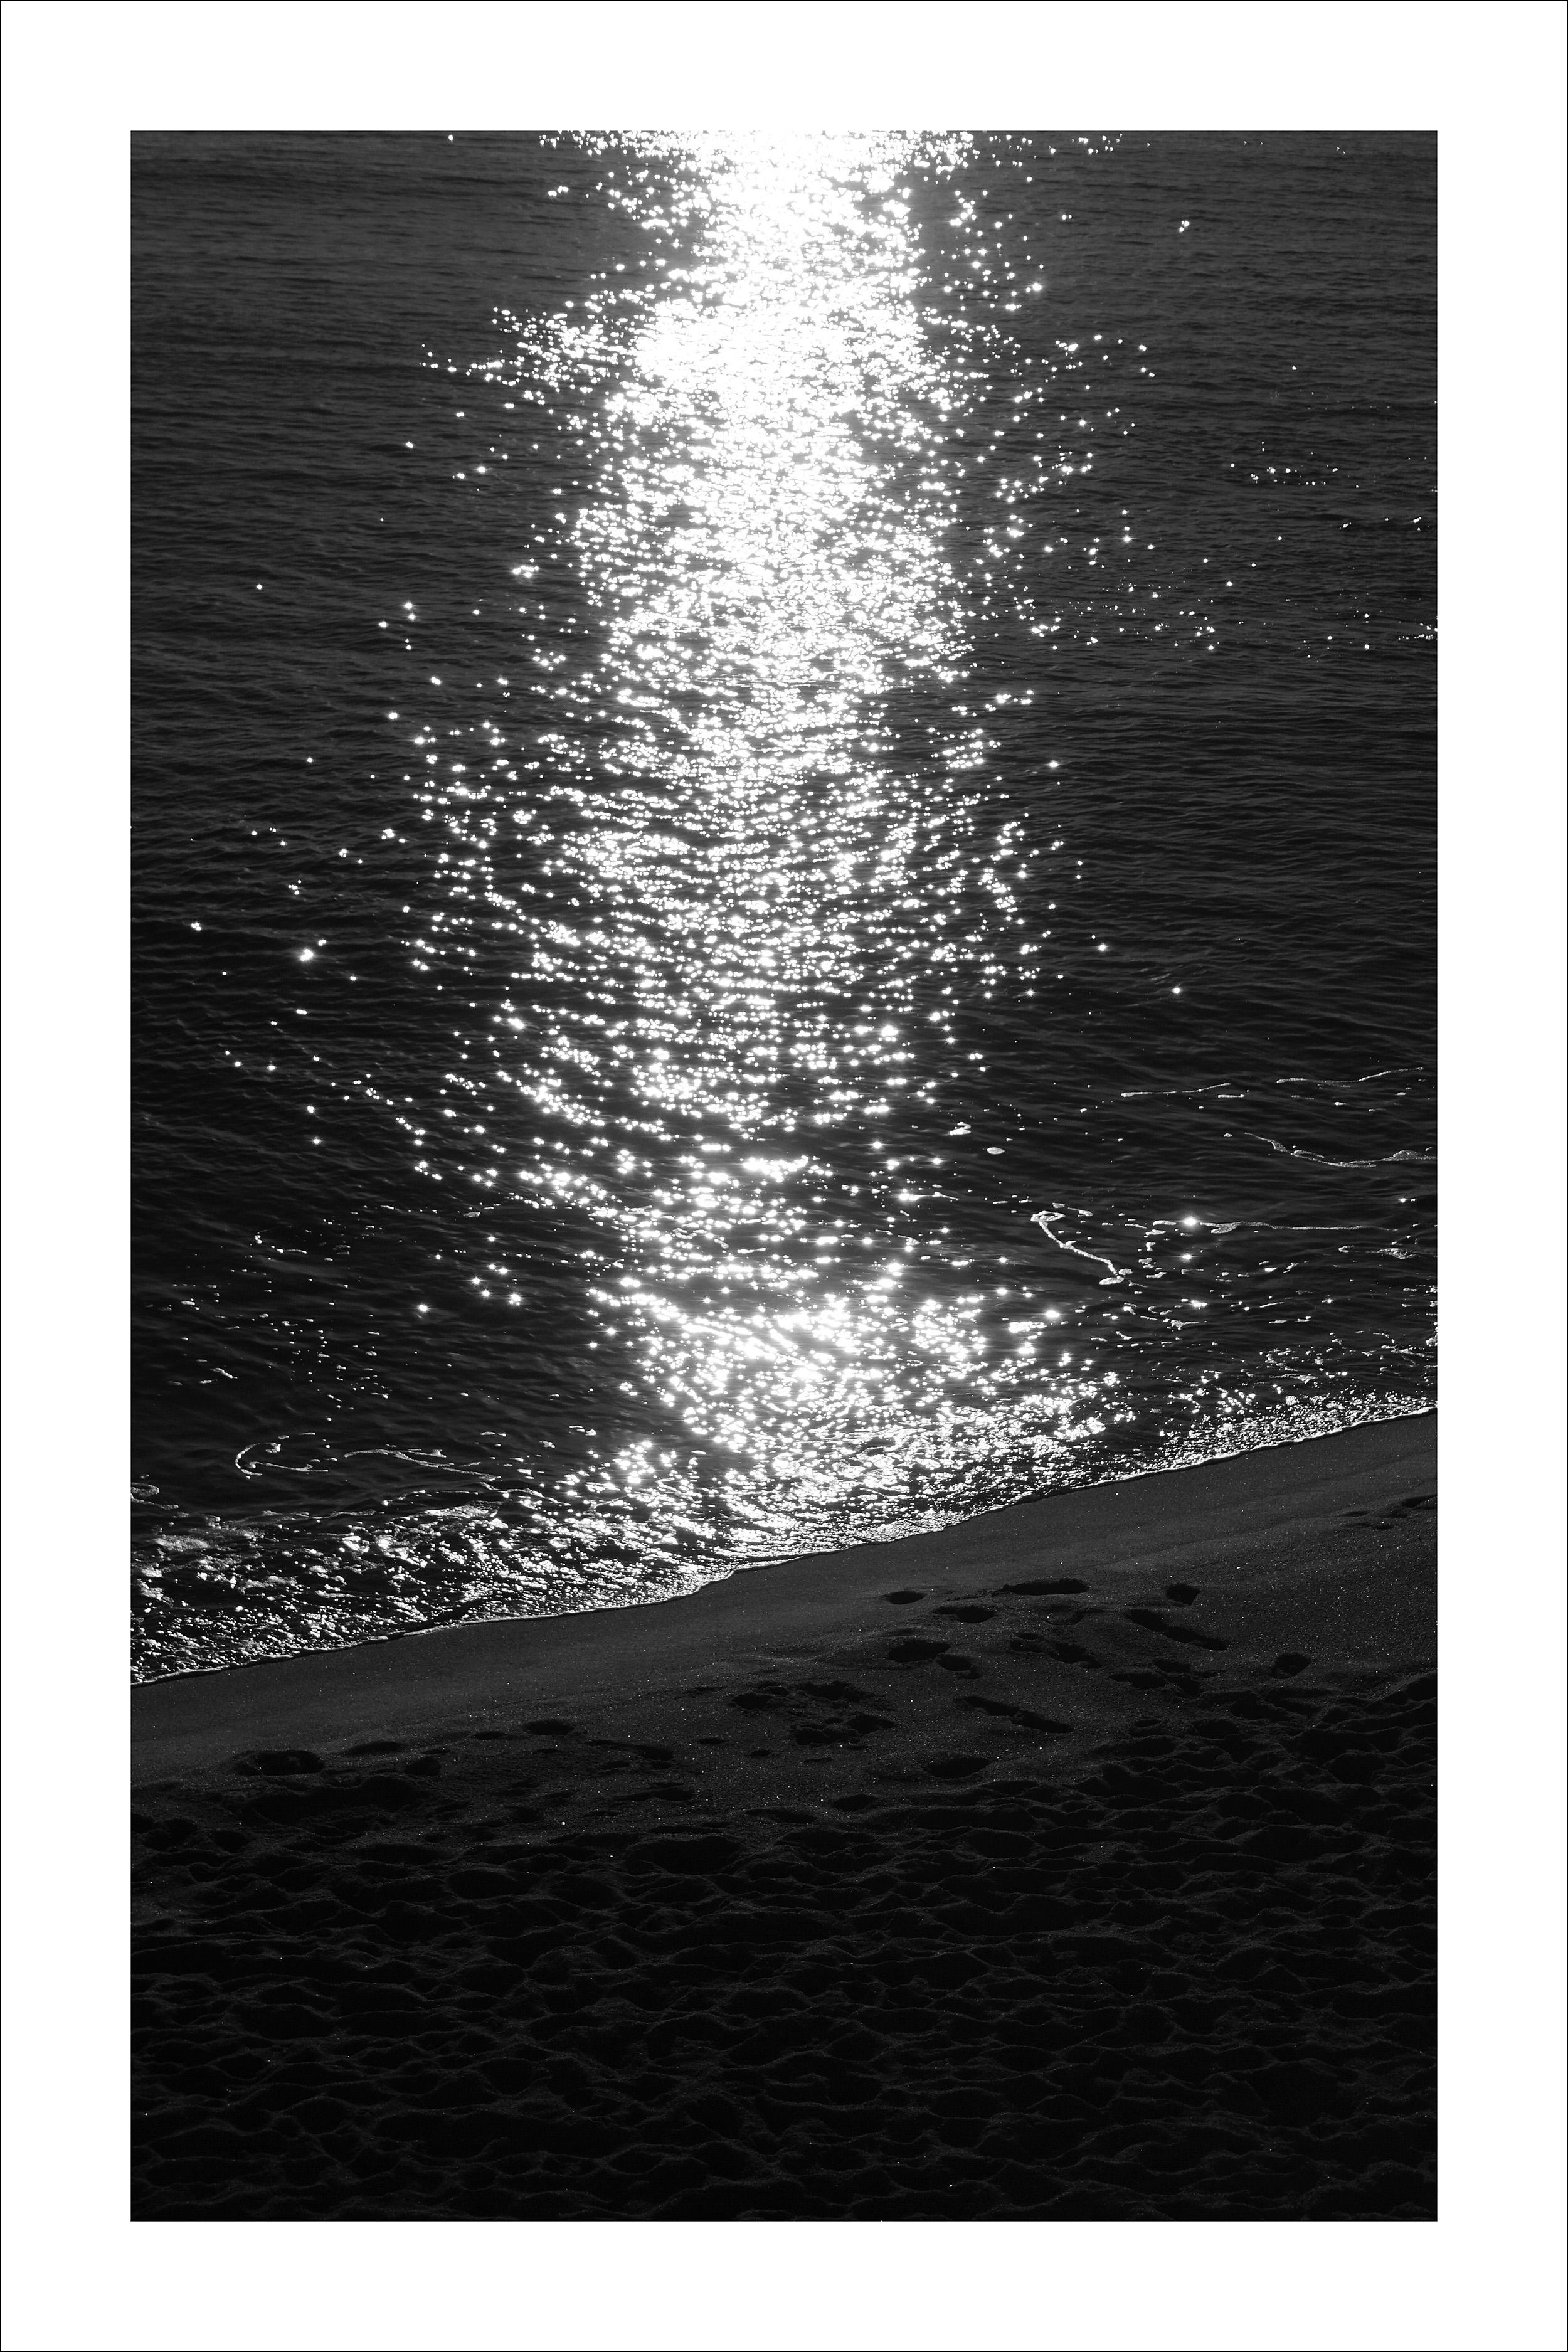 Kind of Cyan Landscape Photograph - Black and White Seascape of Dark Beach Sunrise, Classic Nautical Print of Shore